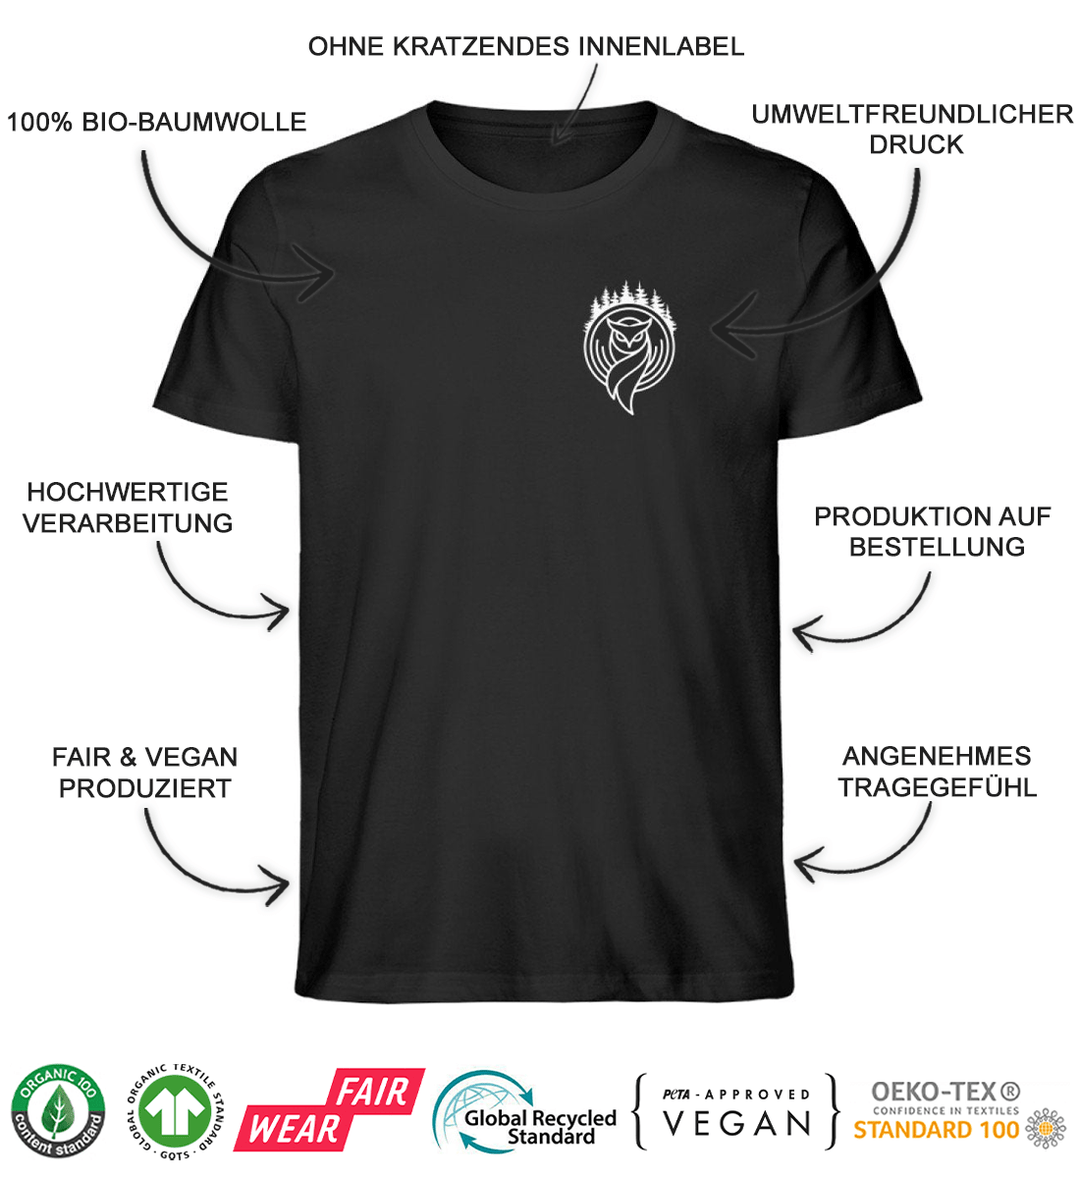 Wald Tag - Herren Premium Bio Shirt